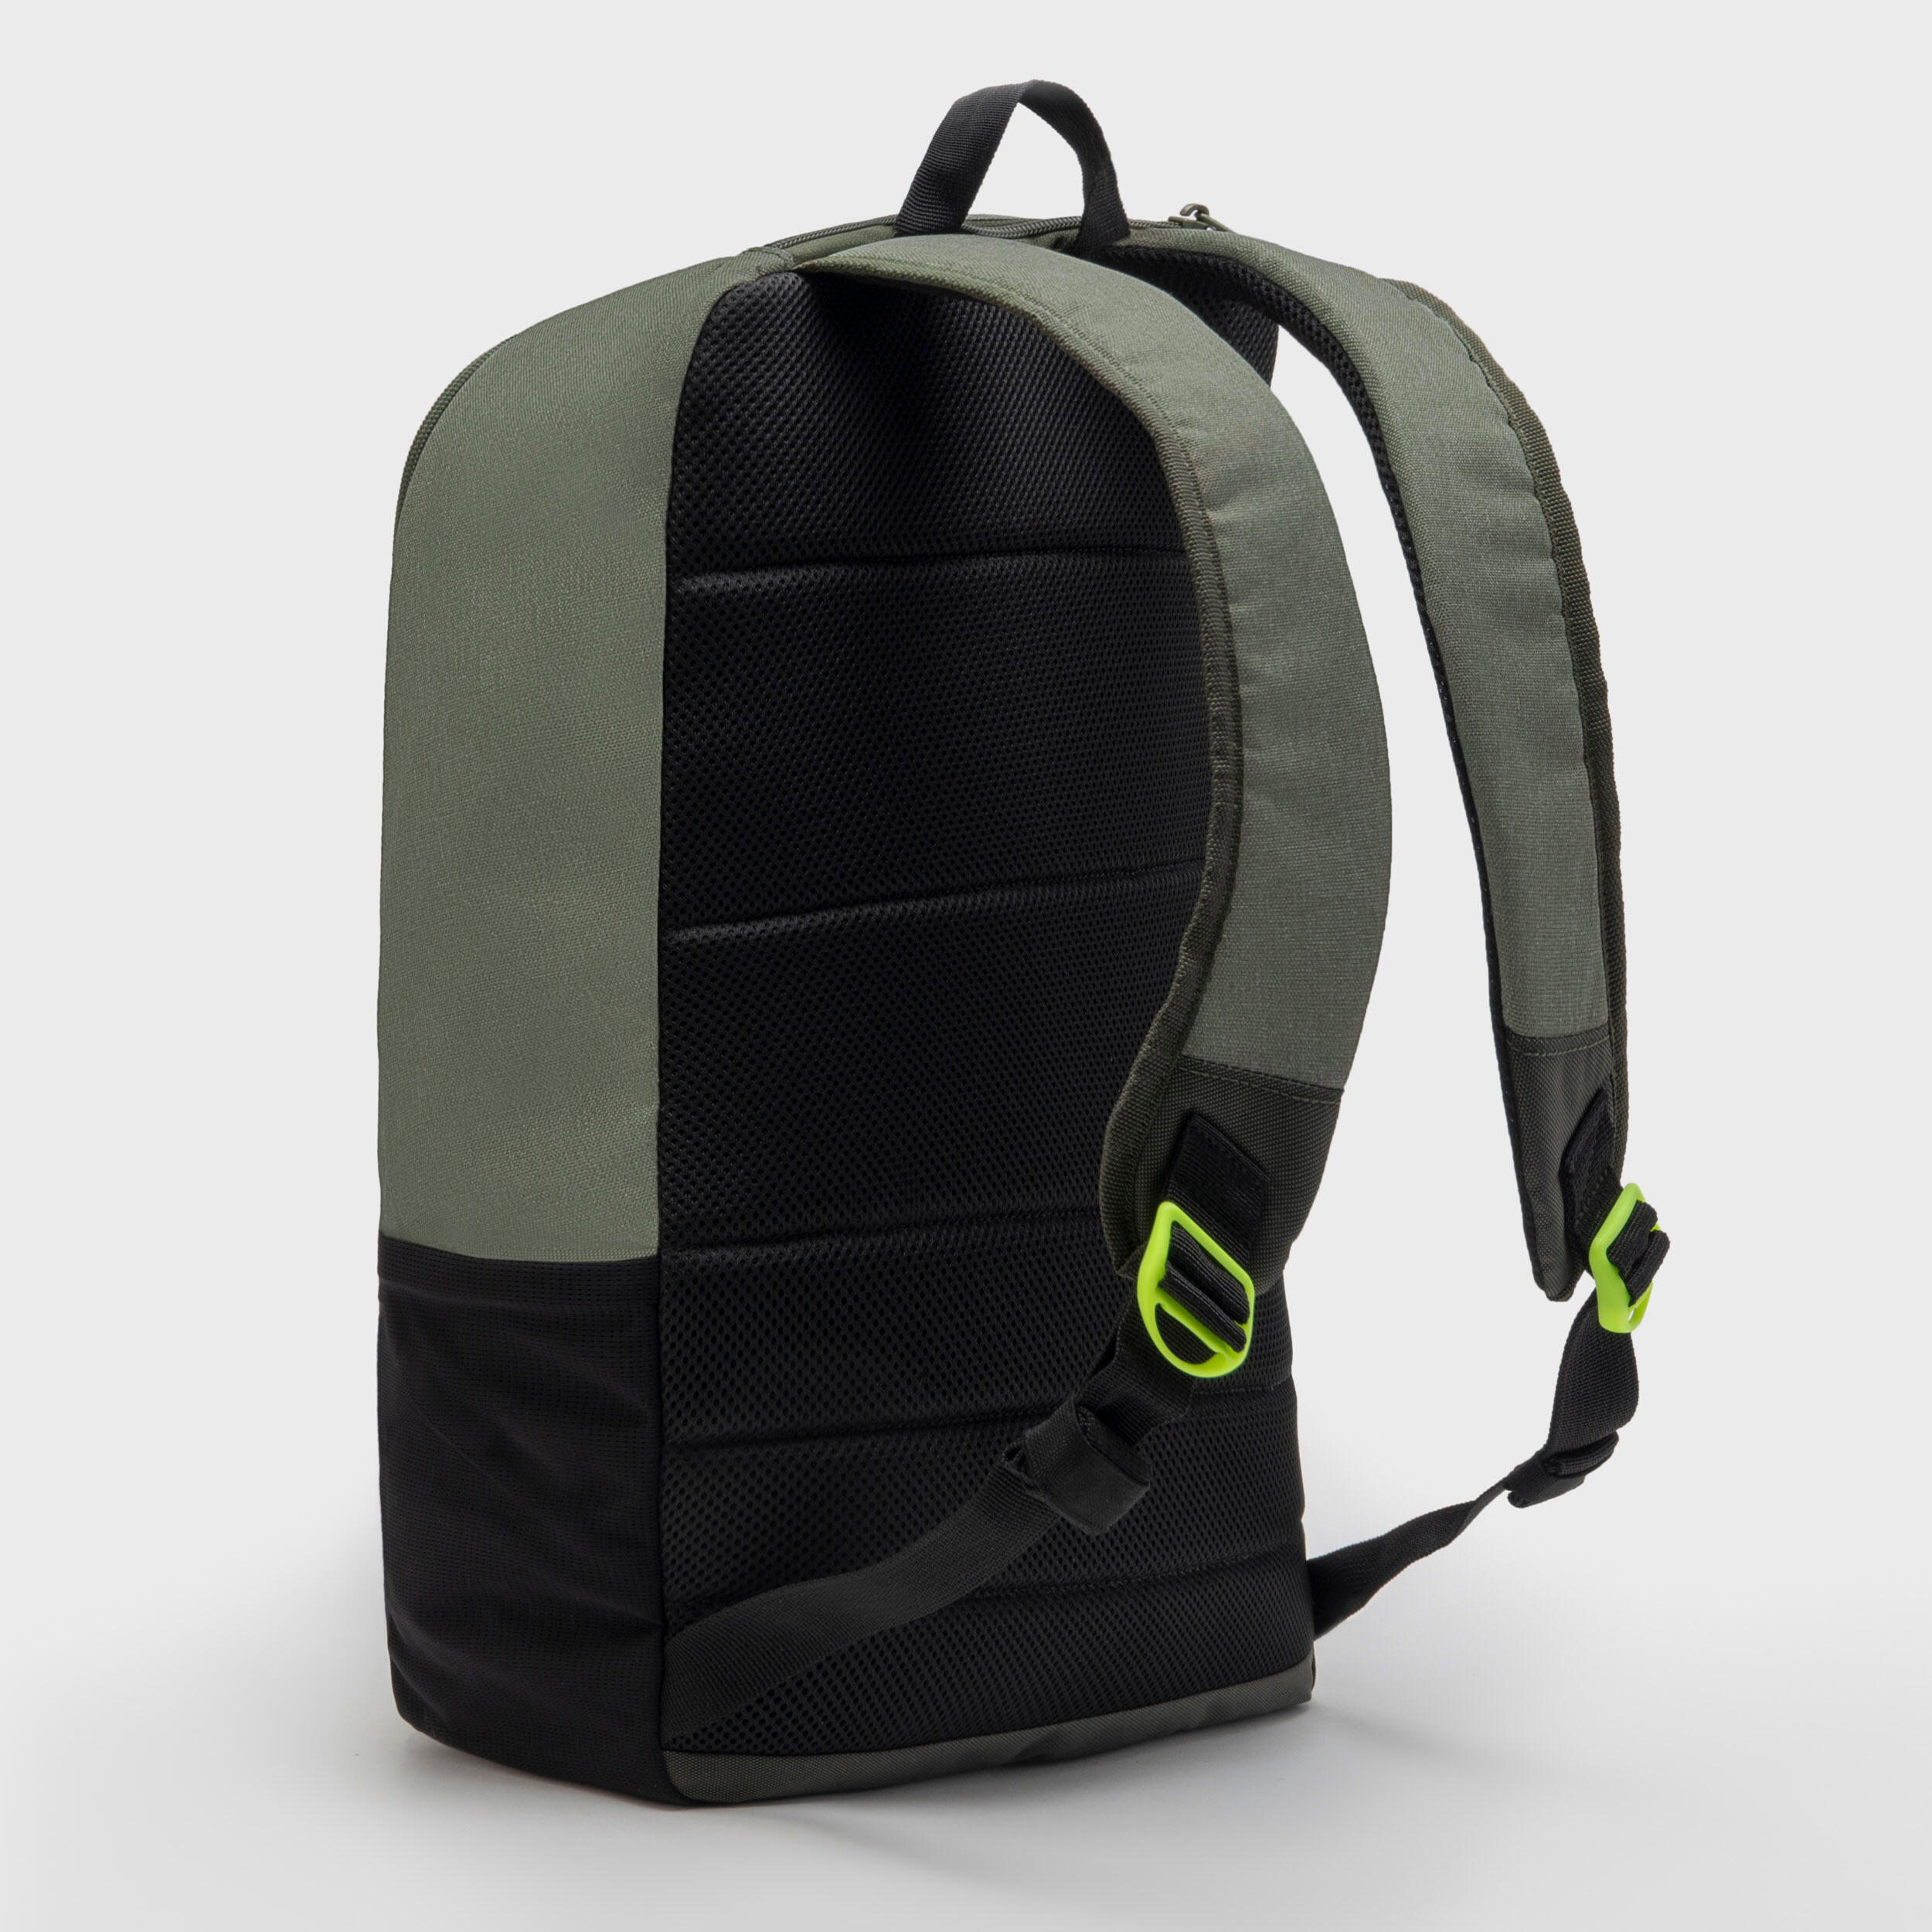 24 L Backpack Essential - Khaki/Neon Yellow 3/8